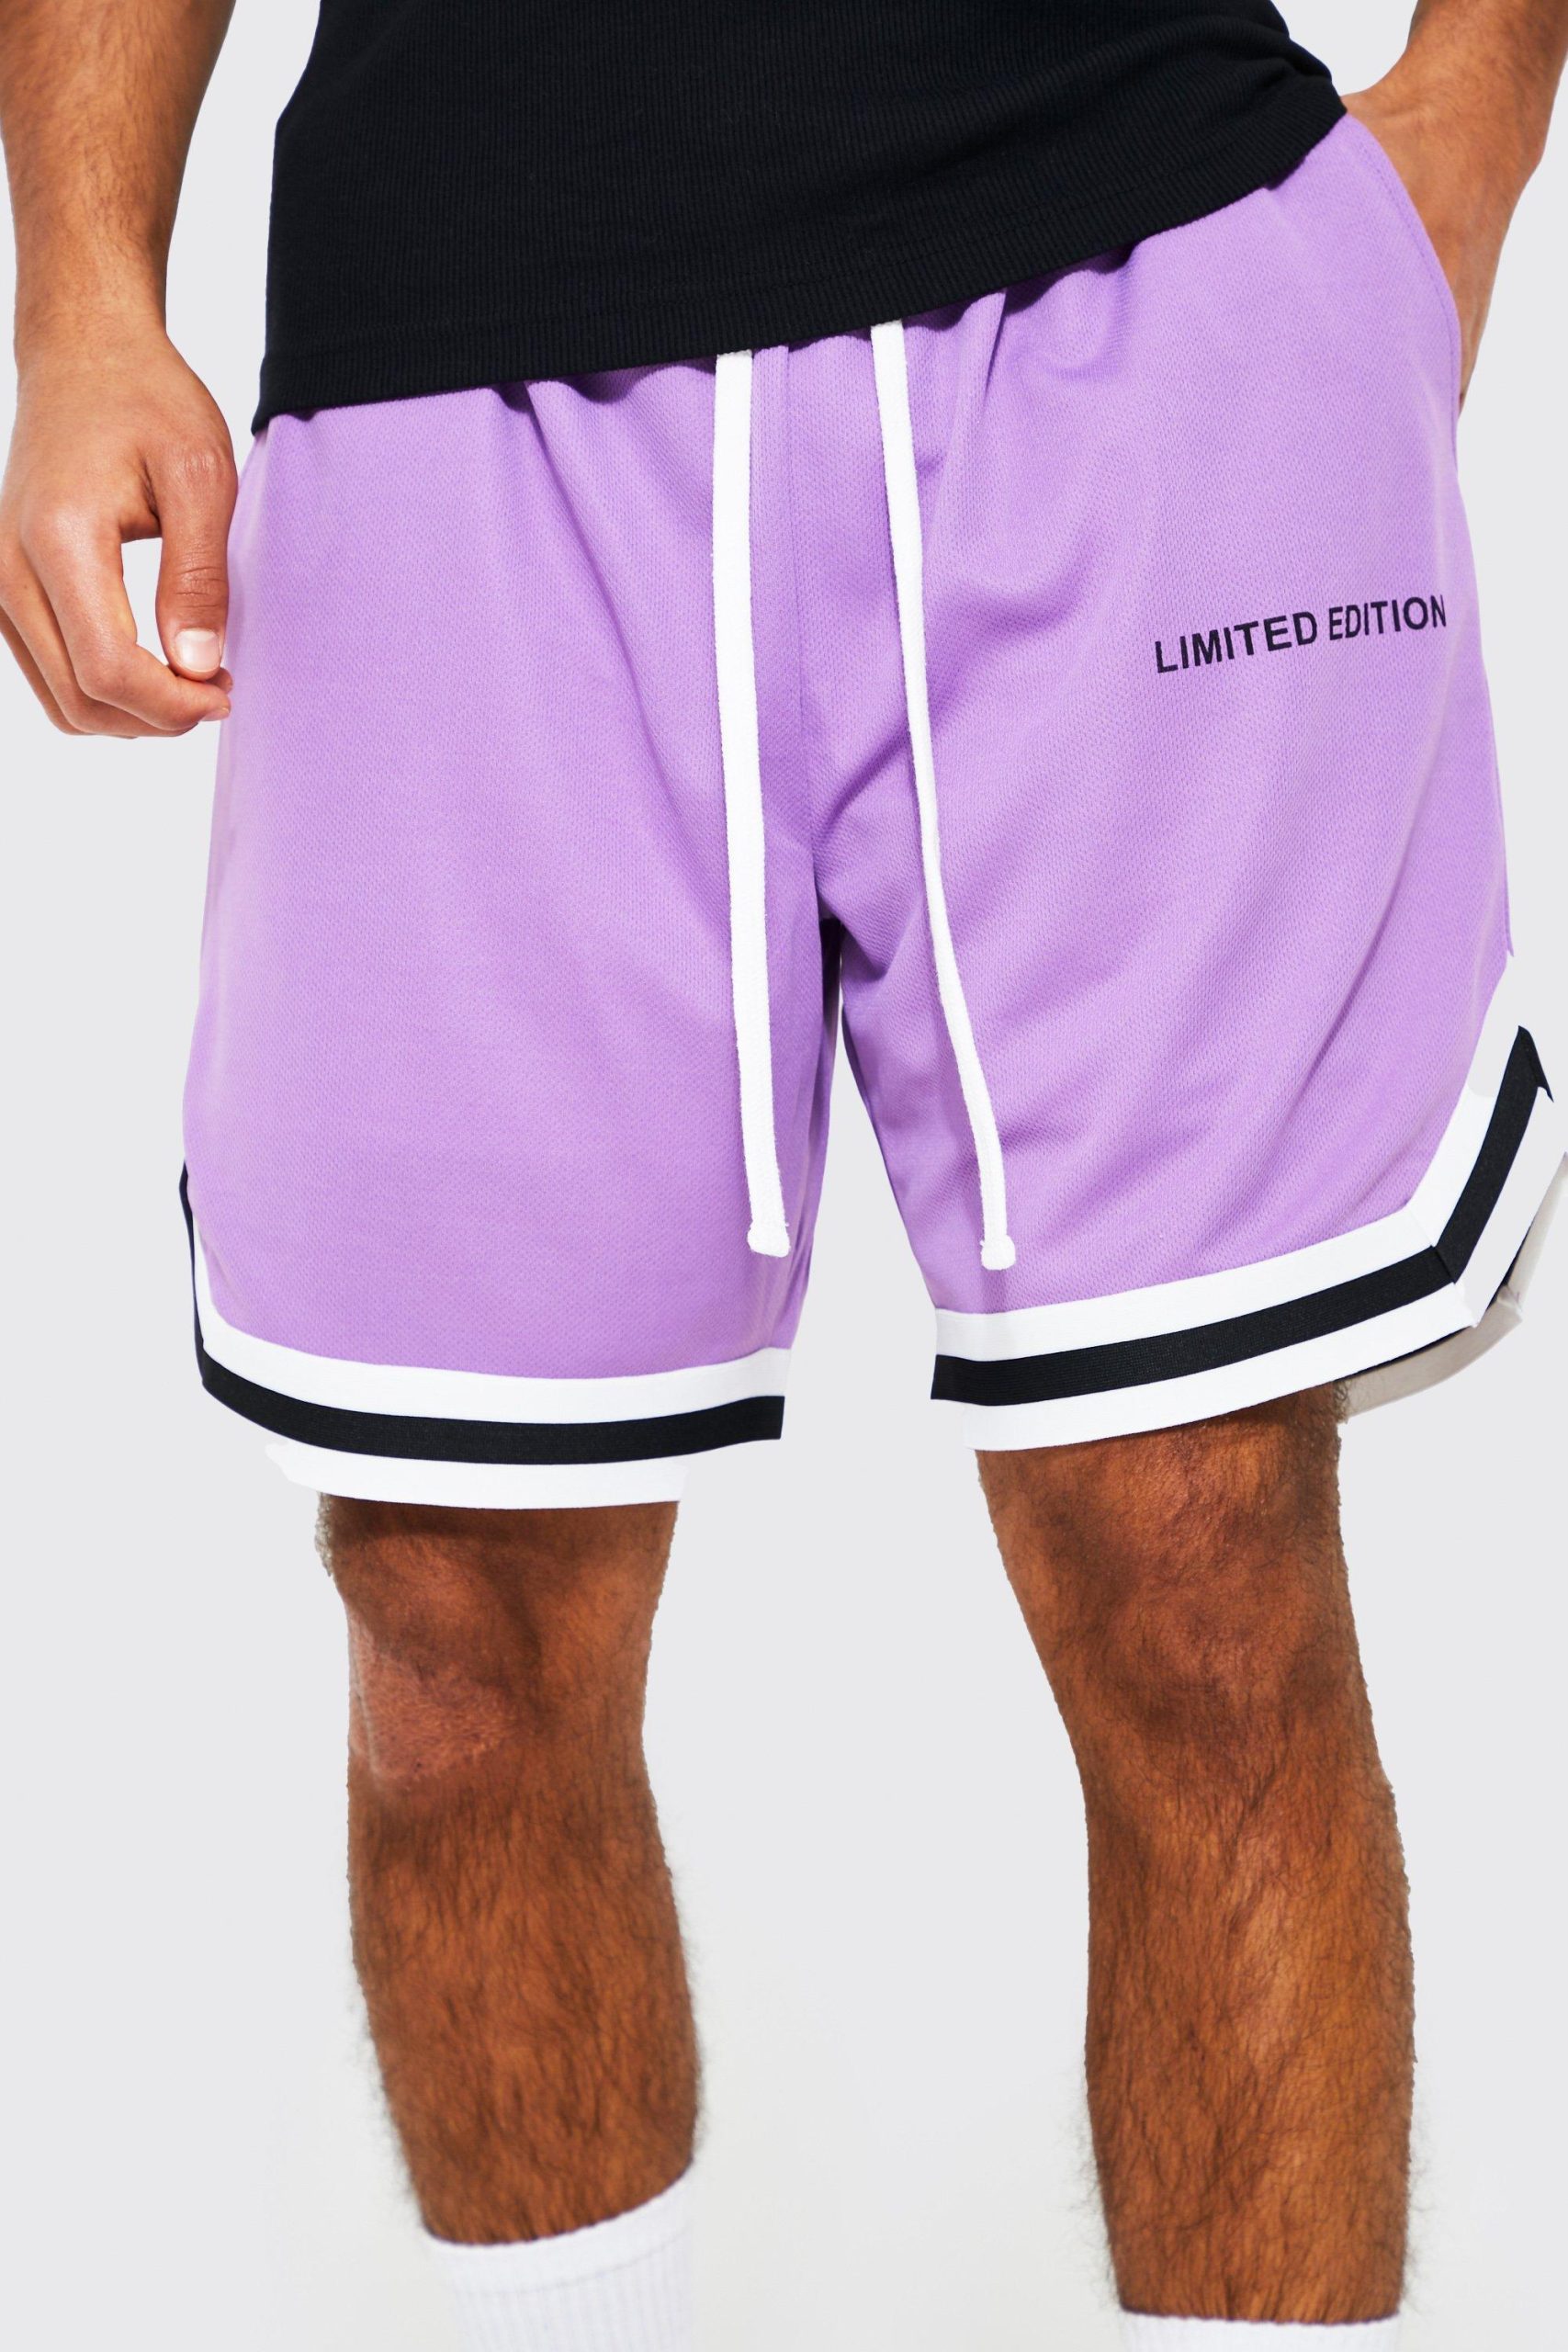 Purple Mesh Shorts, Breathable Mesh Shorts, Active Mesh Shorts, Workout Shorts, Casual Mesh Shorts, Comfortable Shorts, Lightweight Shorts, Fitness Shorts, Manufacturer of Mesh Shorts, Custom Mesh Shorts